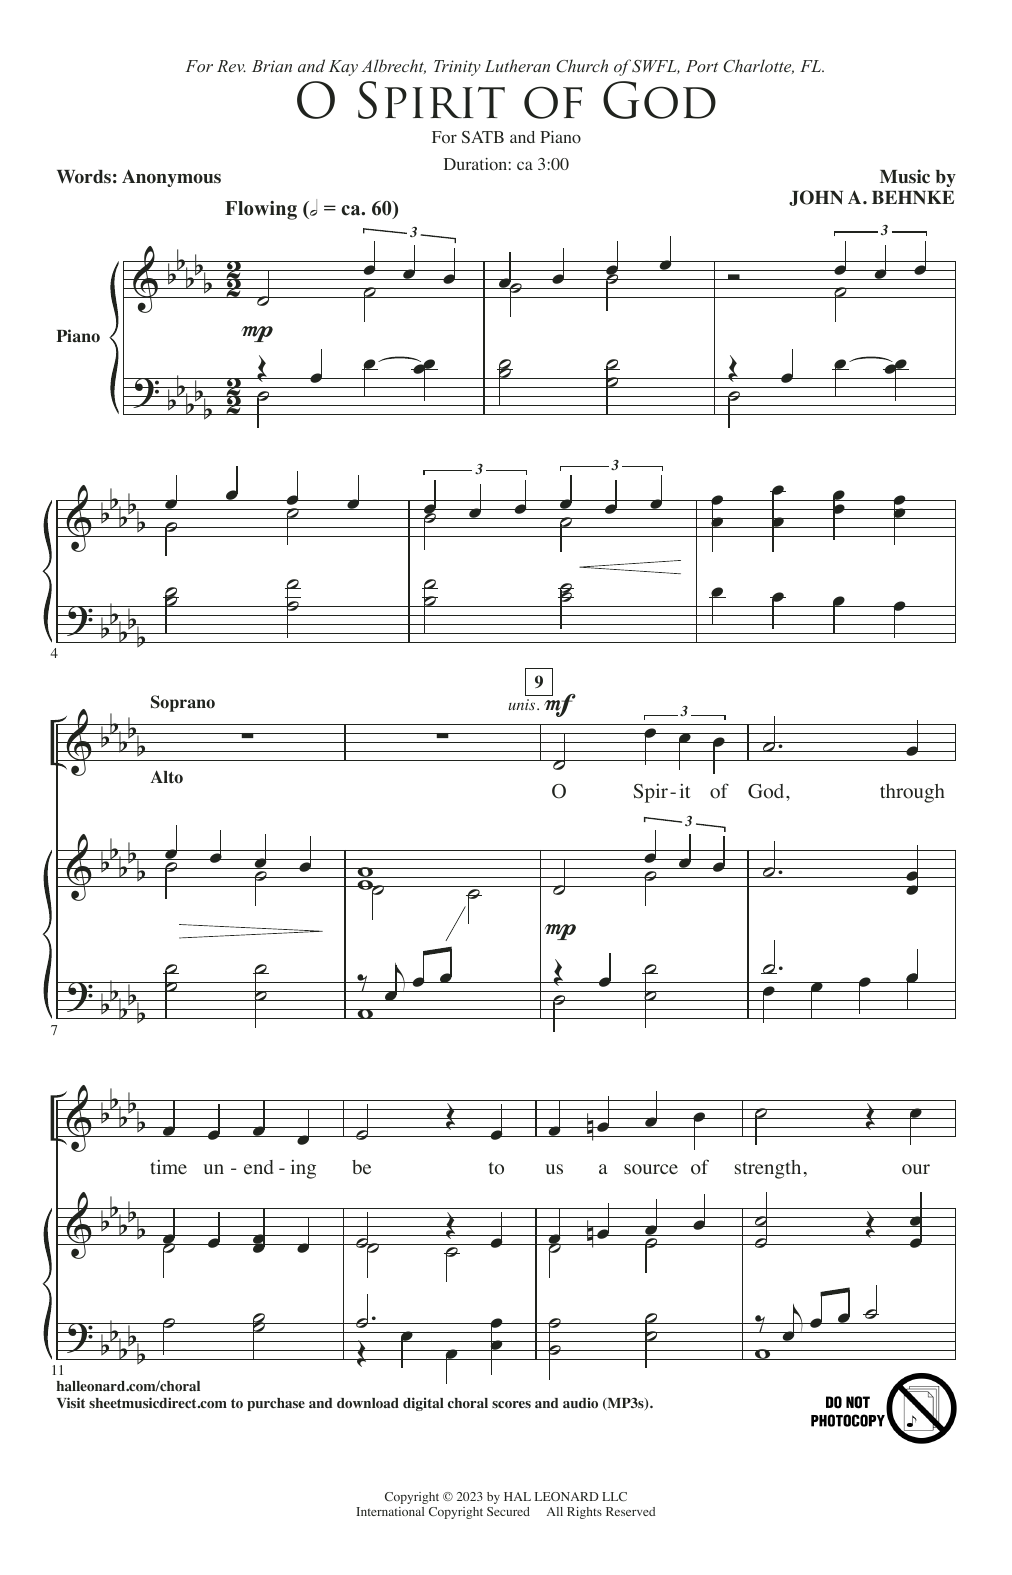 John A. Behnke O Spirit Of God Sheet Music Notes & Chords for SATB Choir - Download or Print PDF